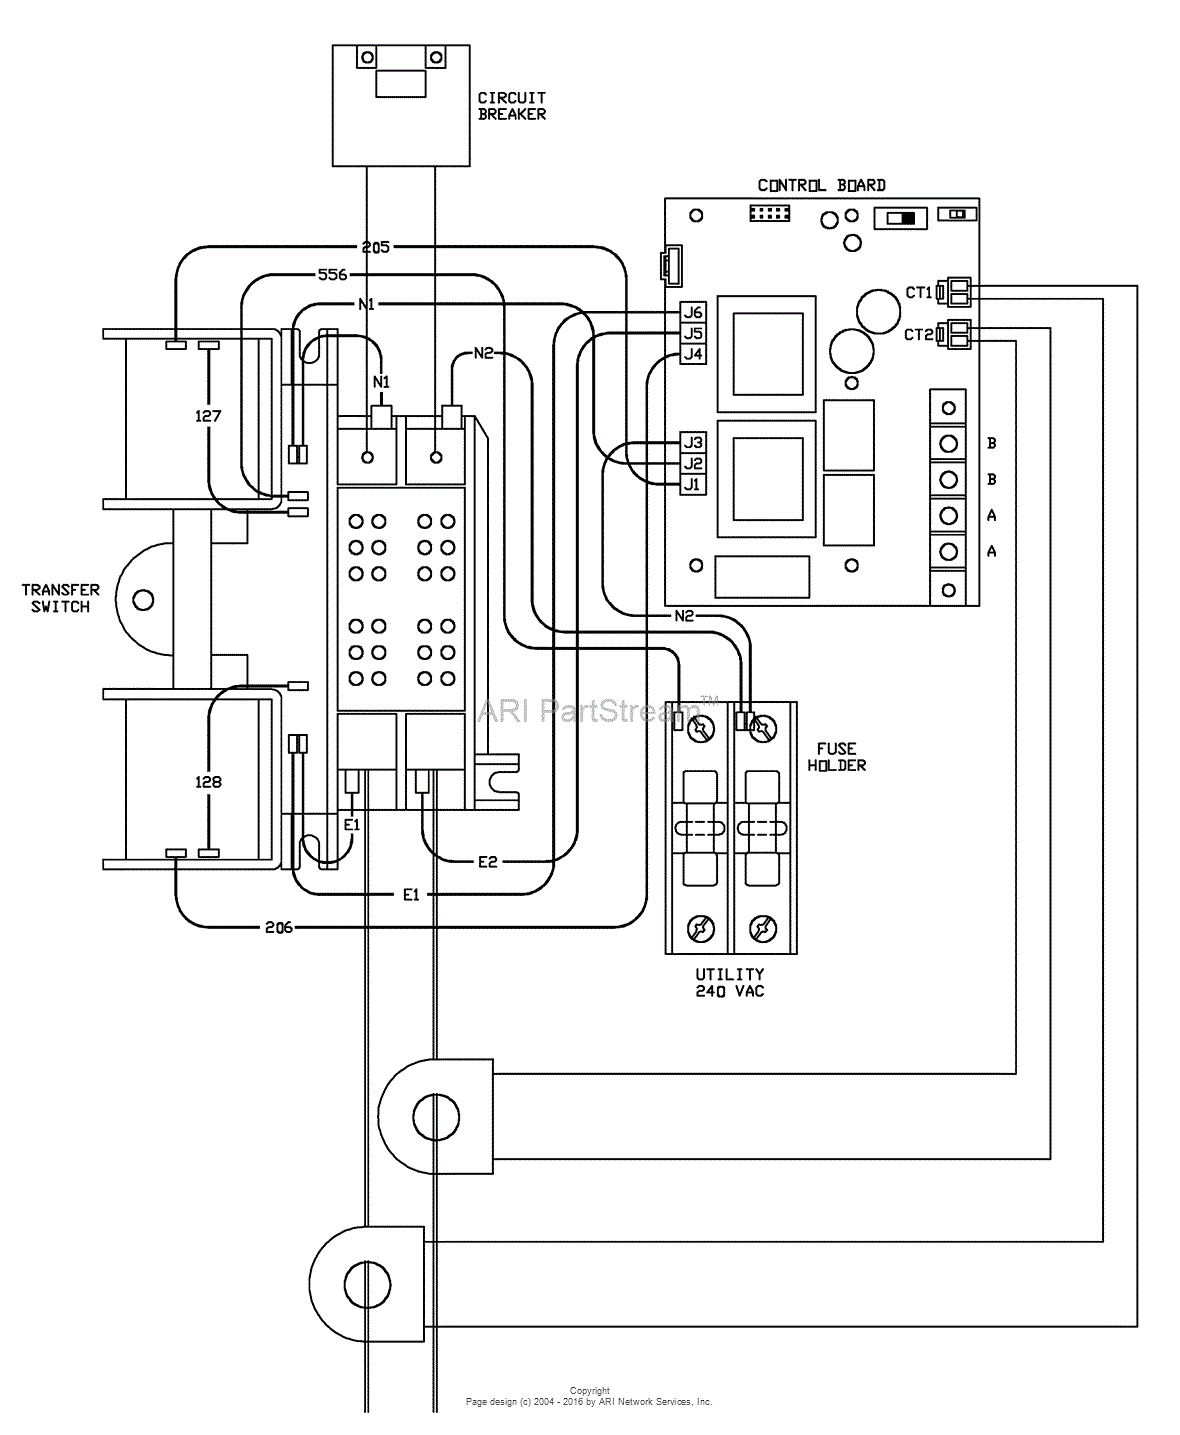 generac ats wiring diagram wiring diagram showgenerac transfer switch wiring pdf wiring diagrams value generac ats